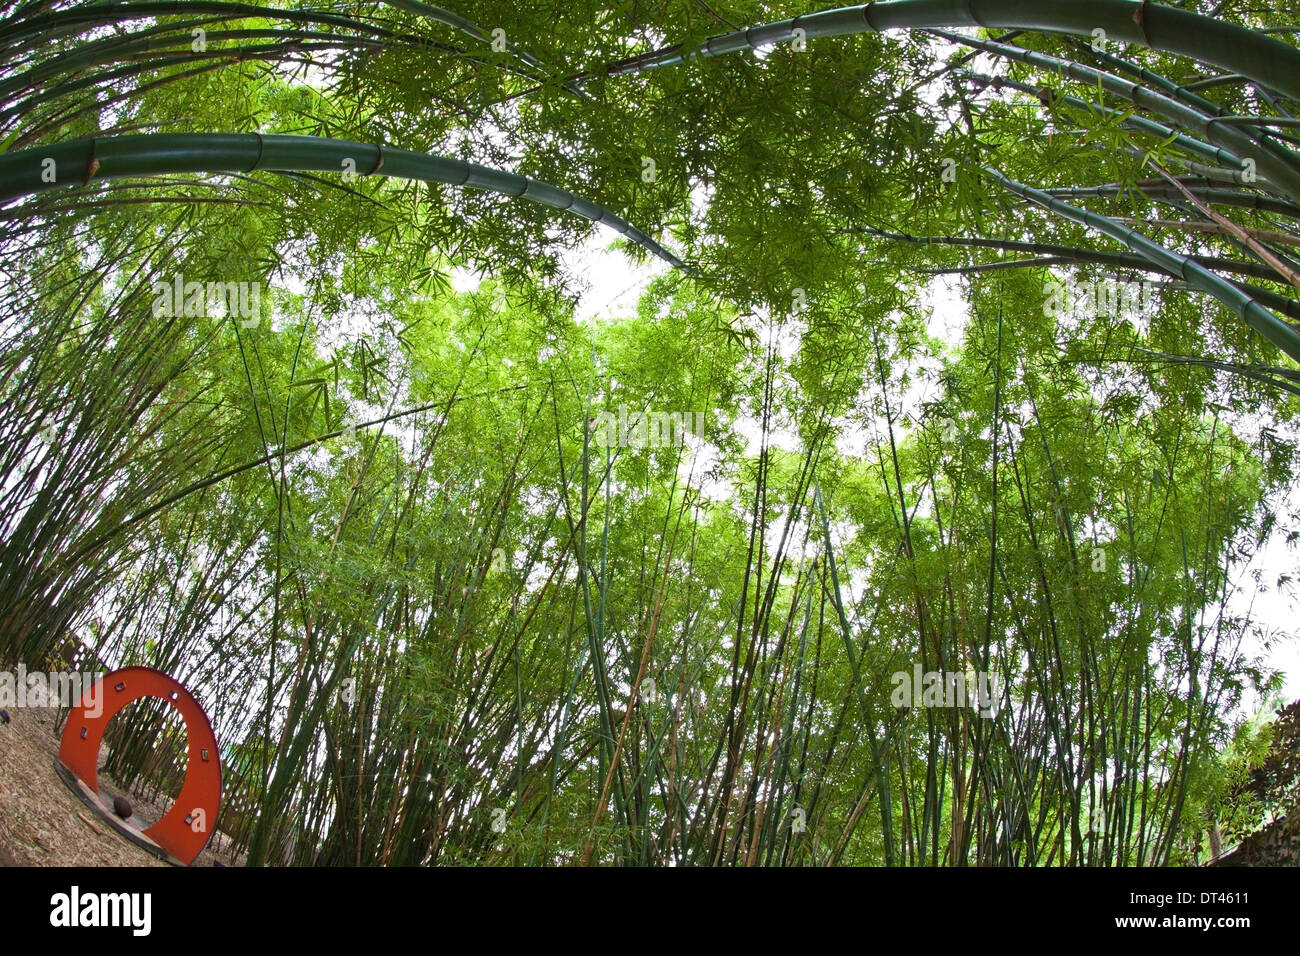 Bamboo grove in the gardens at the Museo de Arte (Art Museum) in San Juan, Puerto Rico Stock Photo